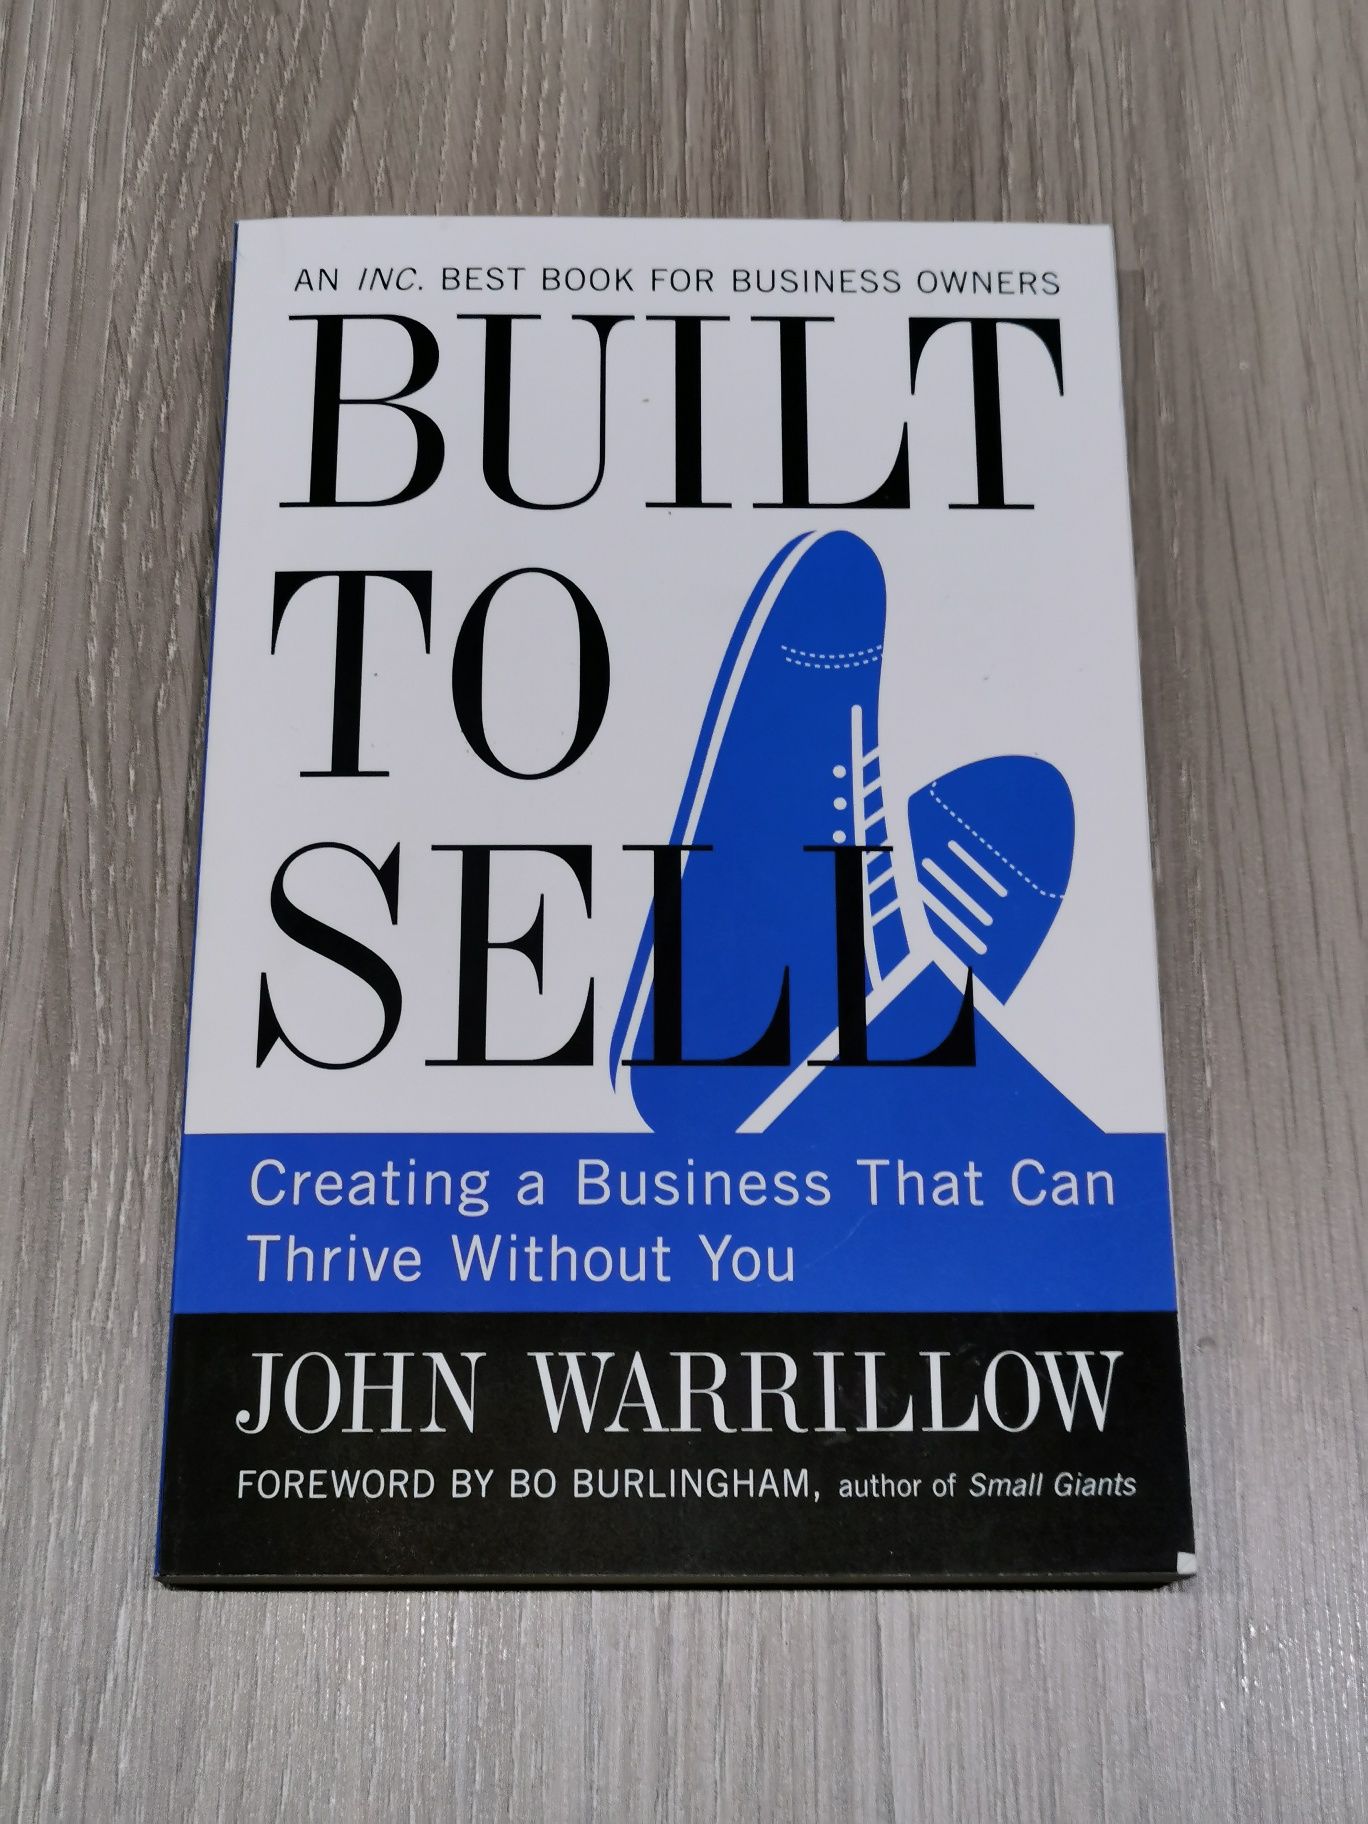 Built to sell - John Warrillow